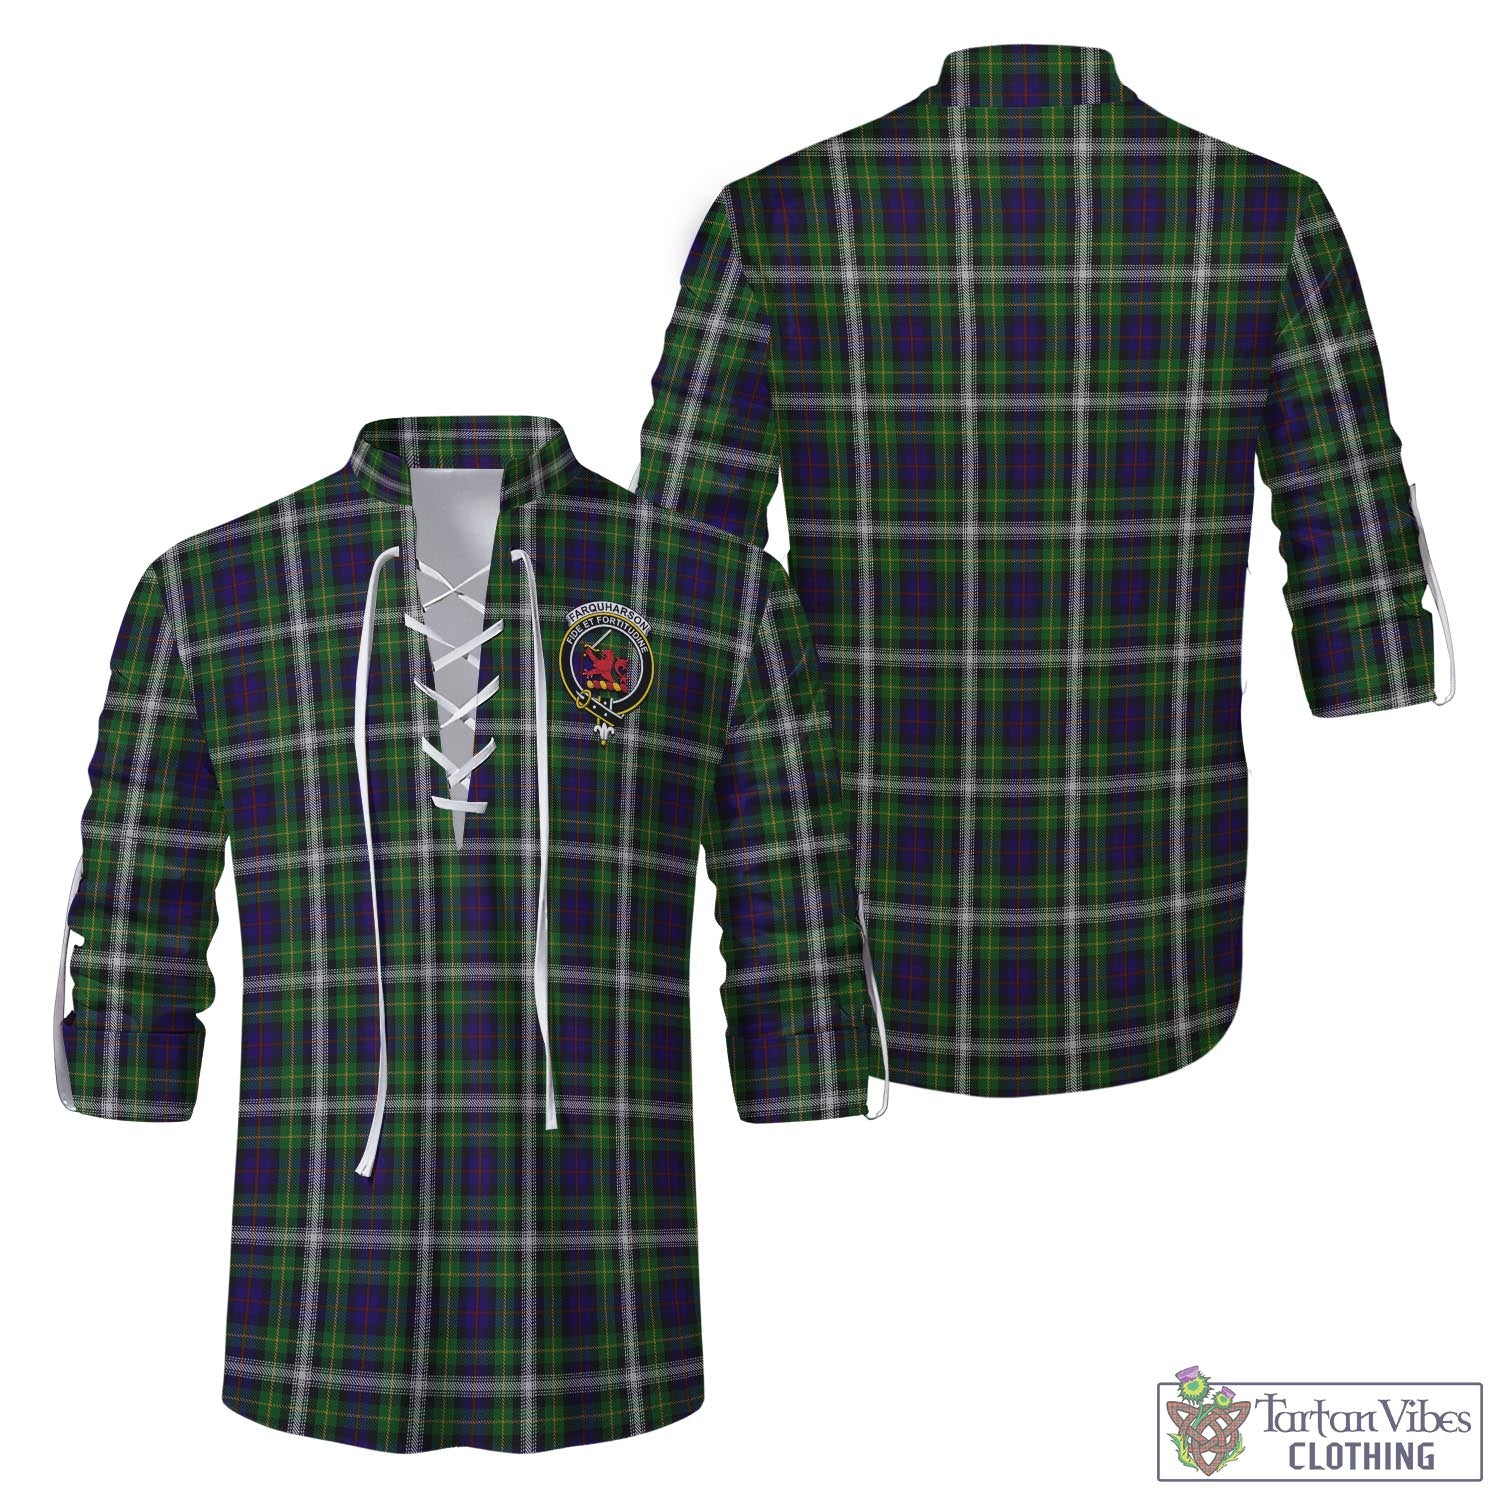 Tartan Vibes Clothing Farquharson Dress Tartan Men's Scottish Traditional Jacobite Ghillie Kilt Shirt with Family Crest